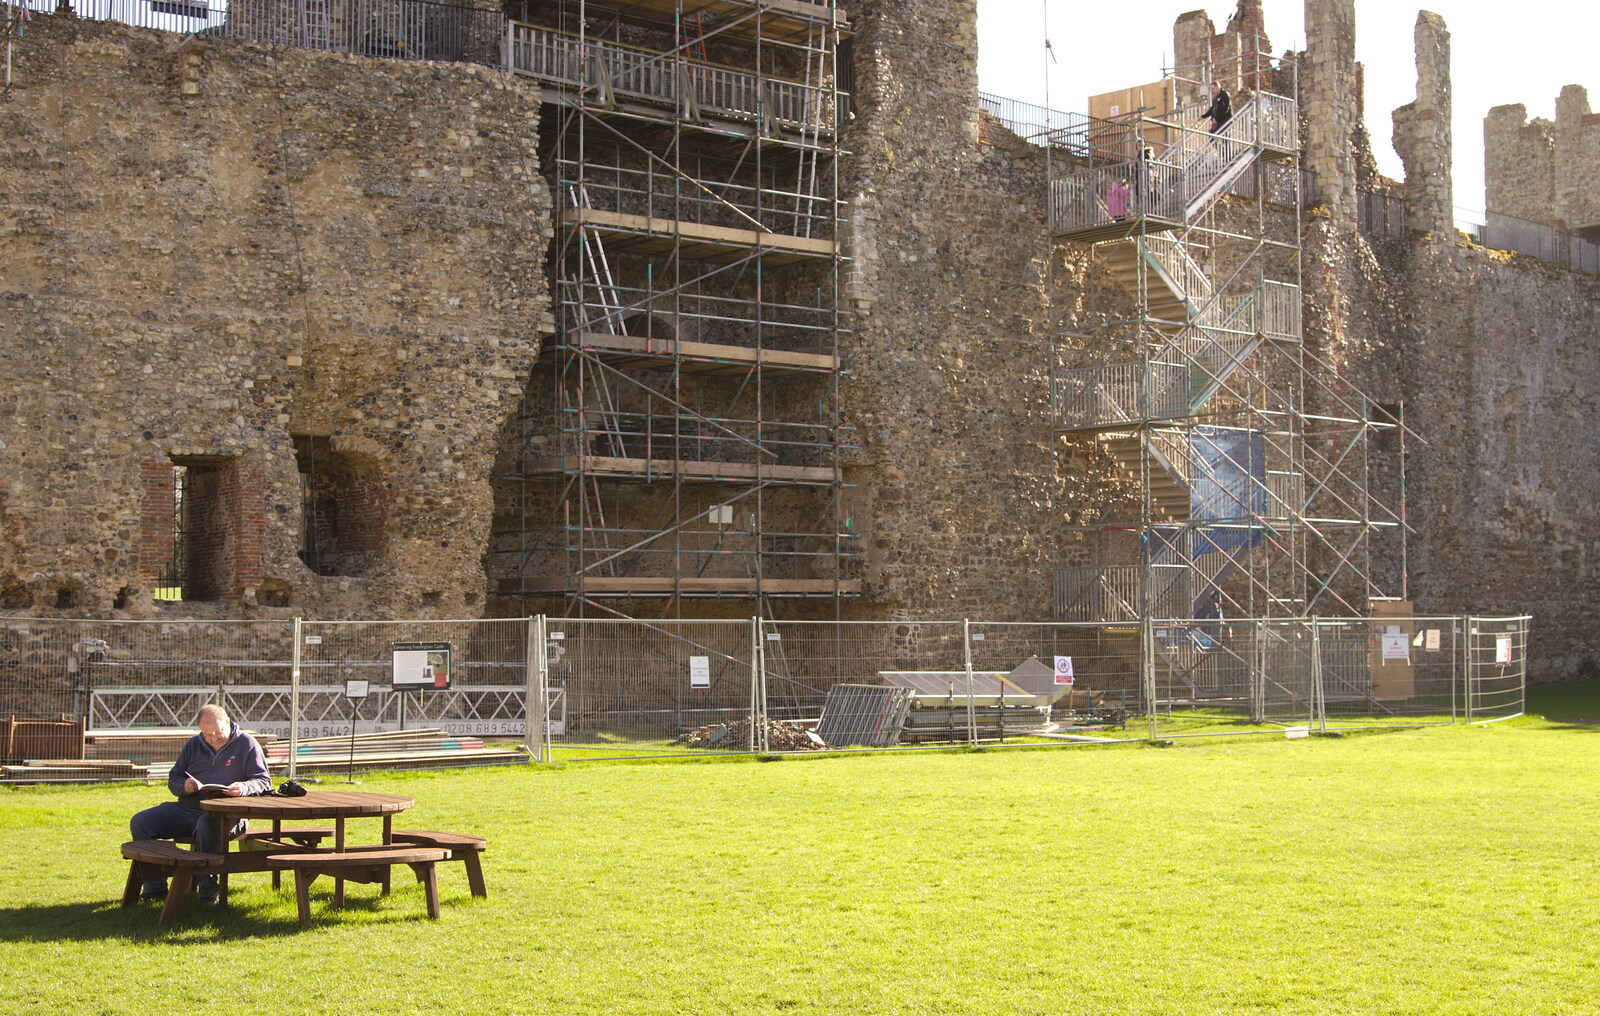 Framlingham Castle is covered in scaffolding from A Trip to Framlingham Castle, Framlingham, Suffolk - 16th February 2014